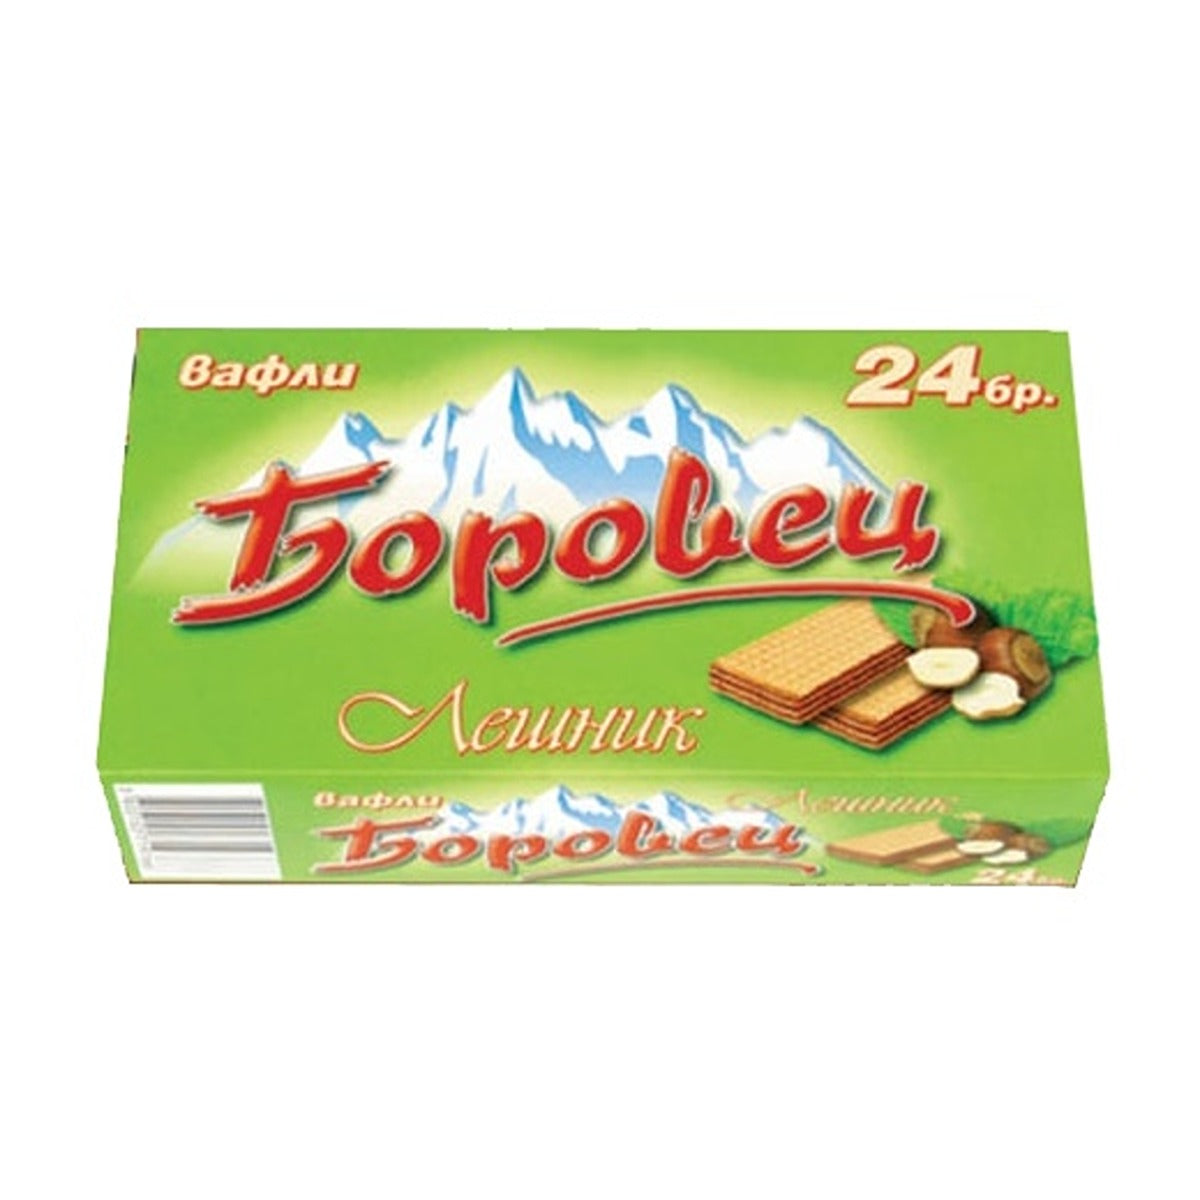 Gopoley - Borovec Hazelnut Wafers - 630g - Continental Food Store